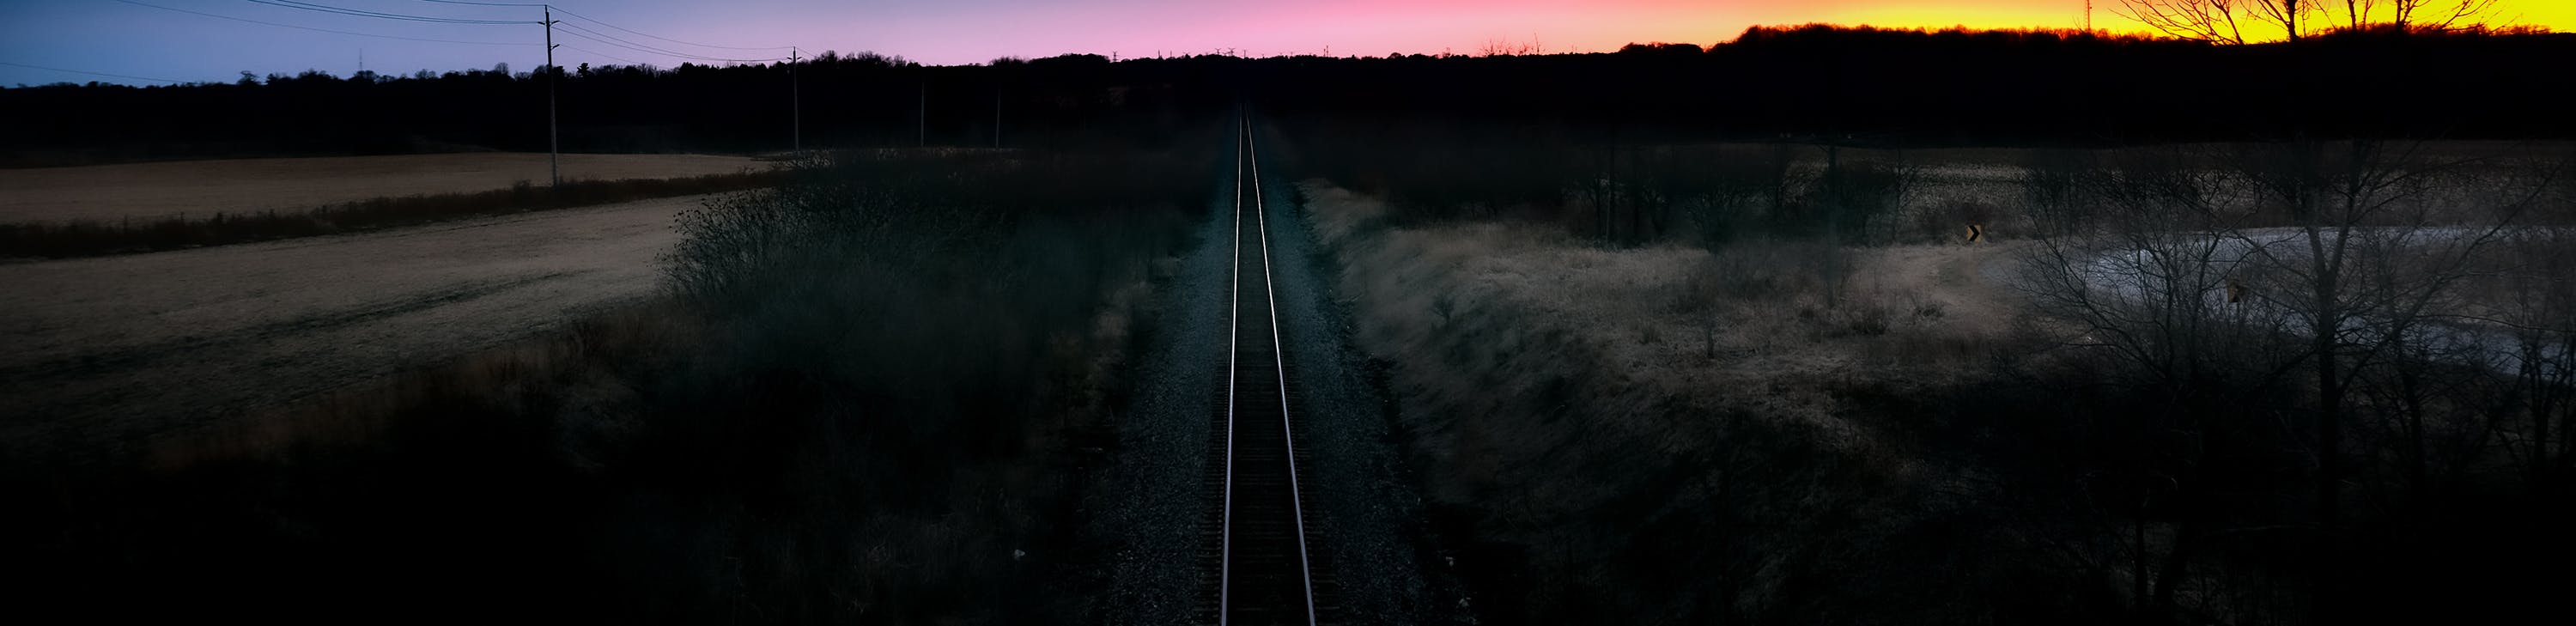 Image of Port Hope Train Tracks at Sunset